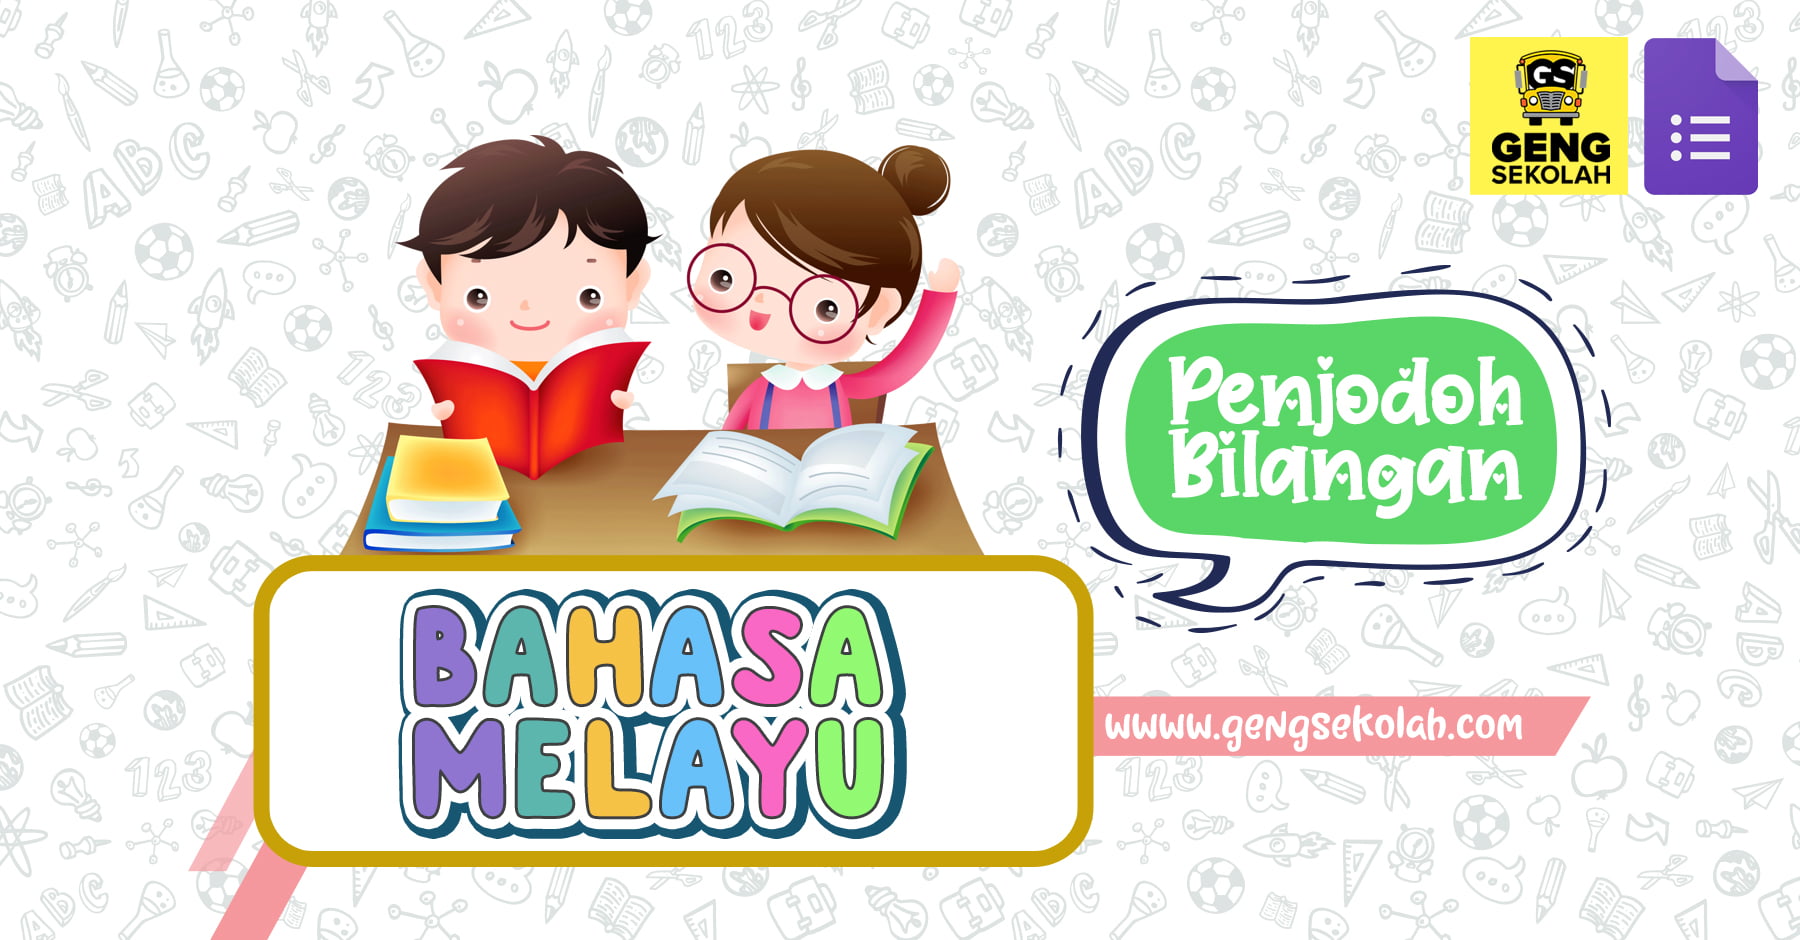 Latihan Bahasa Melayu Penjodoh Bilangan Geng Sekolah